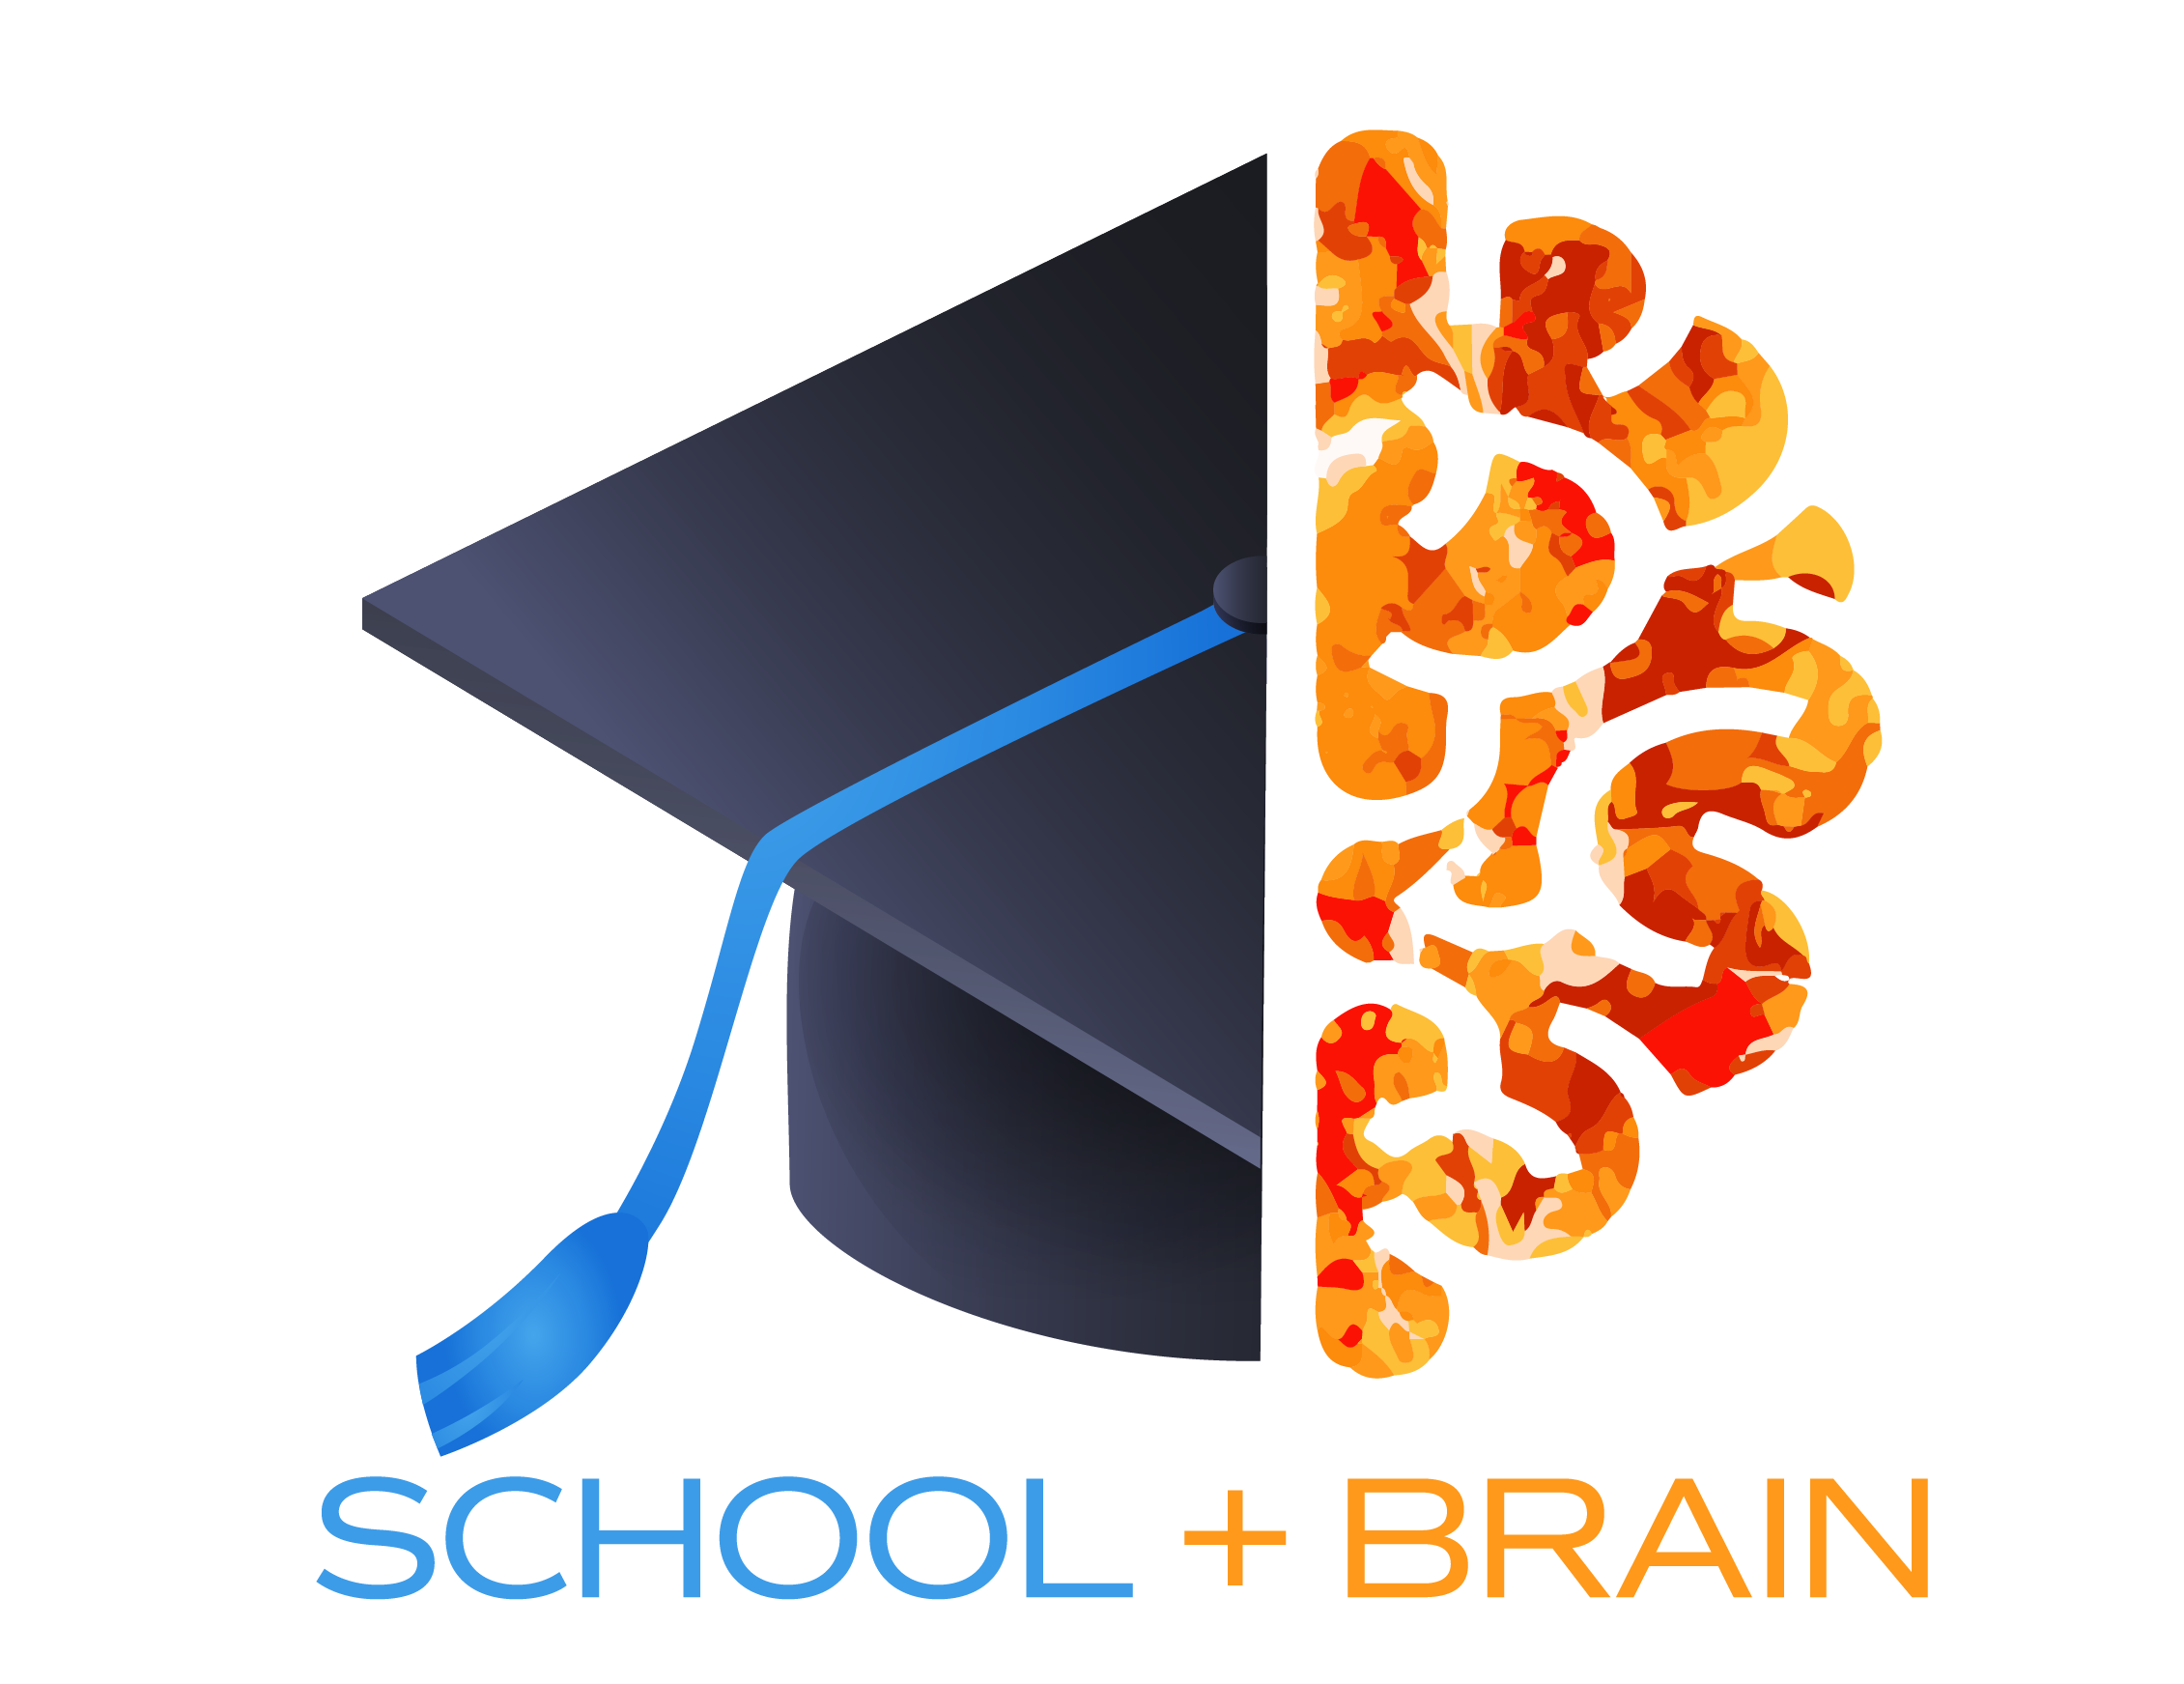 School +Brain Transparent.png